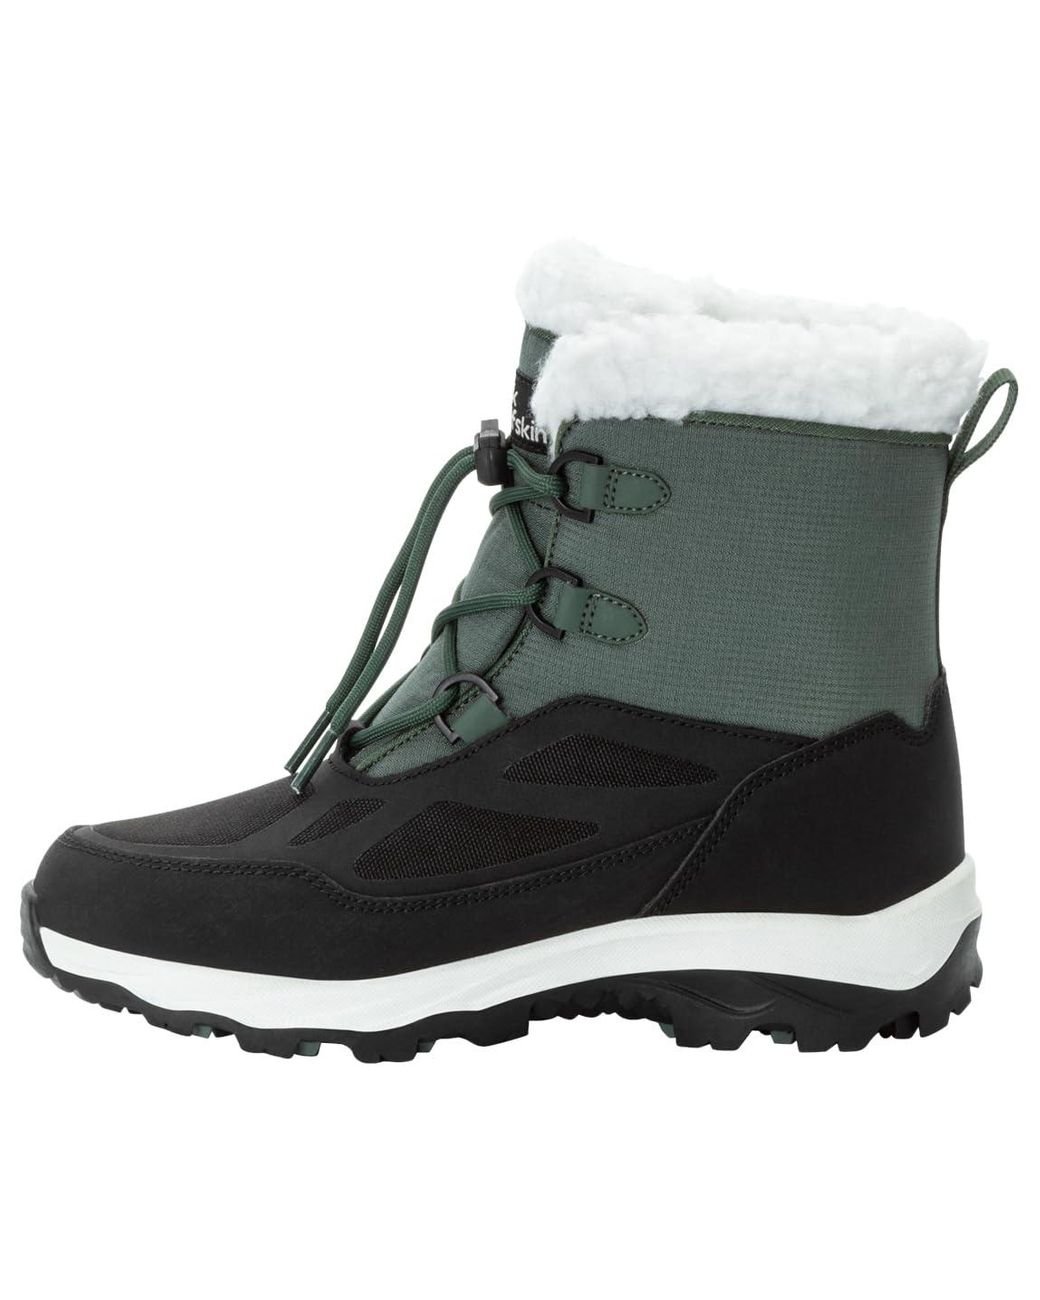 Jack Wolfskin Vojo Shell Xt Texapore Mid K Winter Boots in Black | Lyst UK